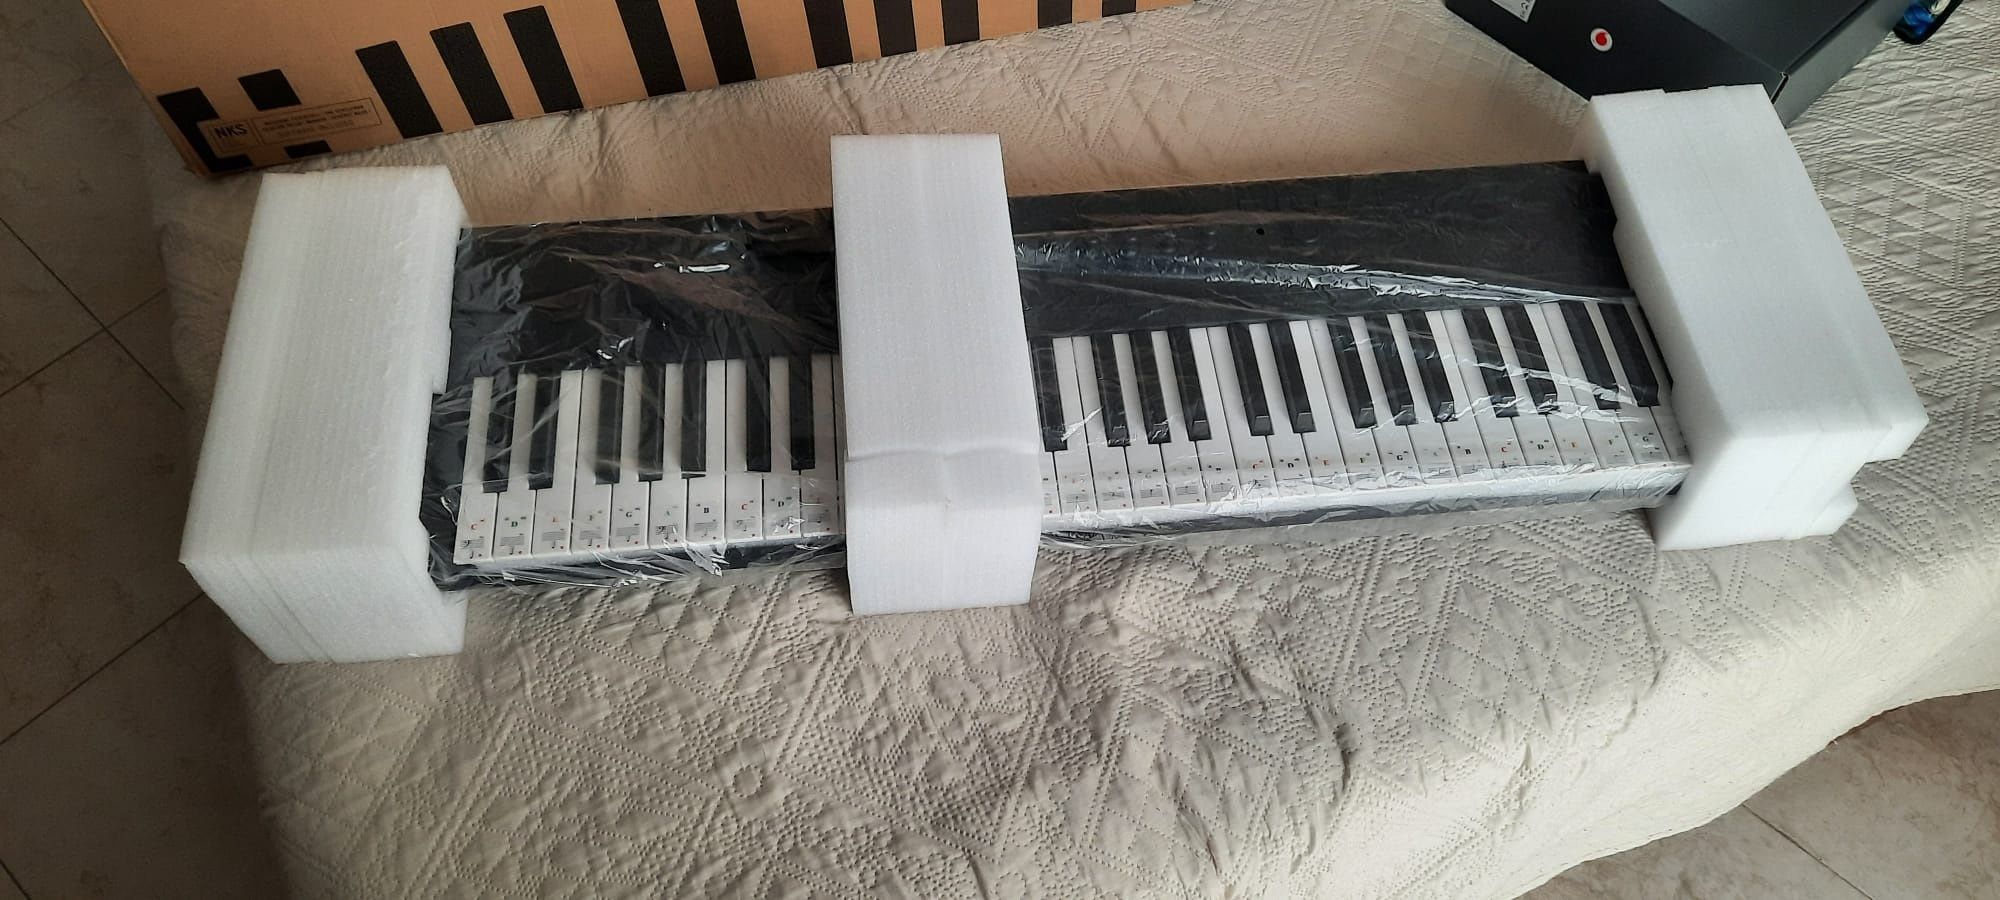 Komplete kontrol a61 teclado piano